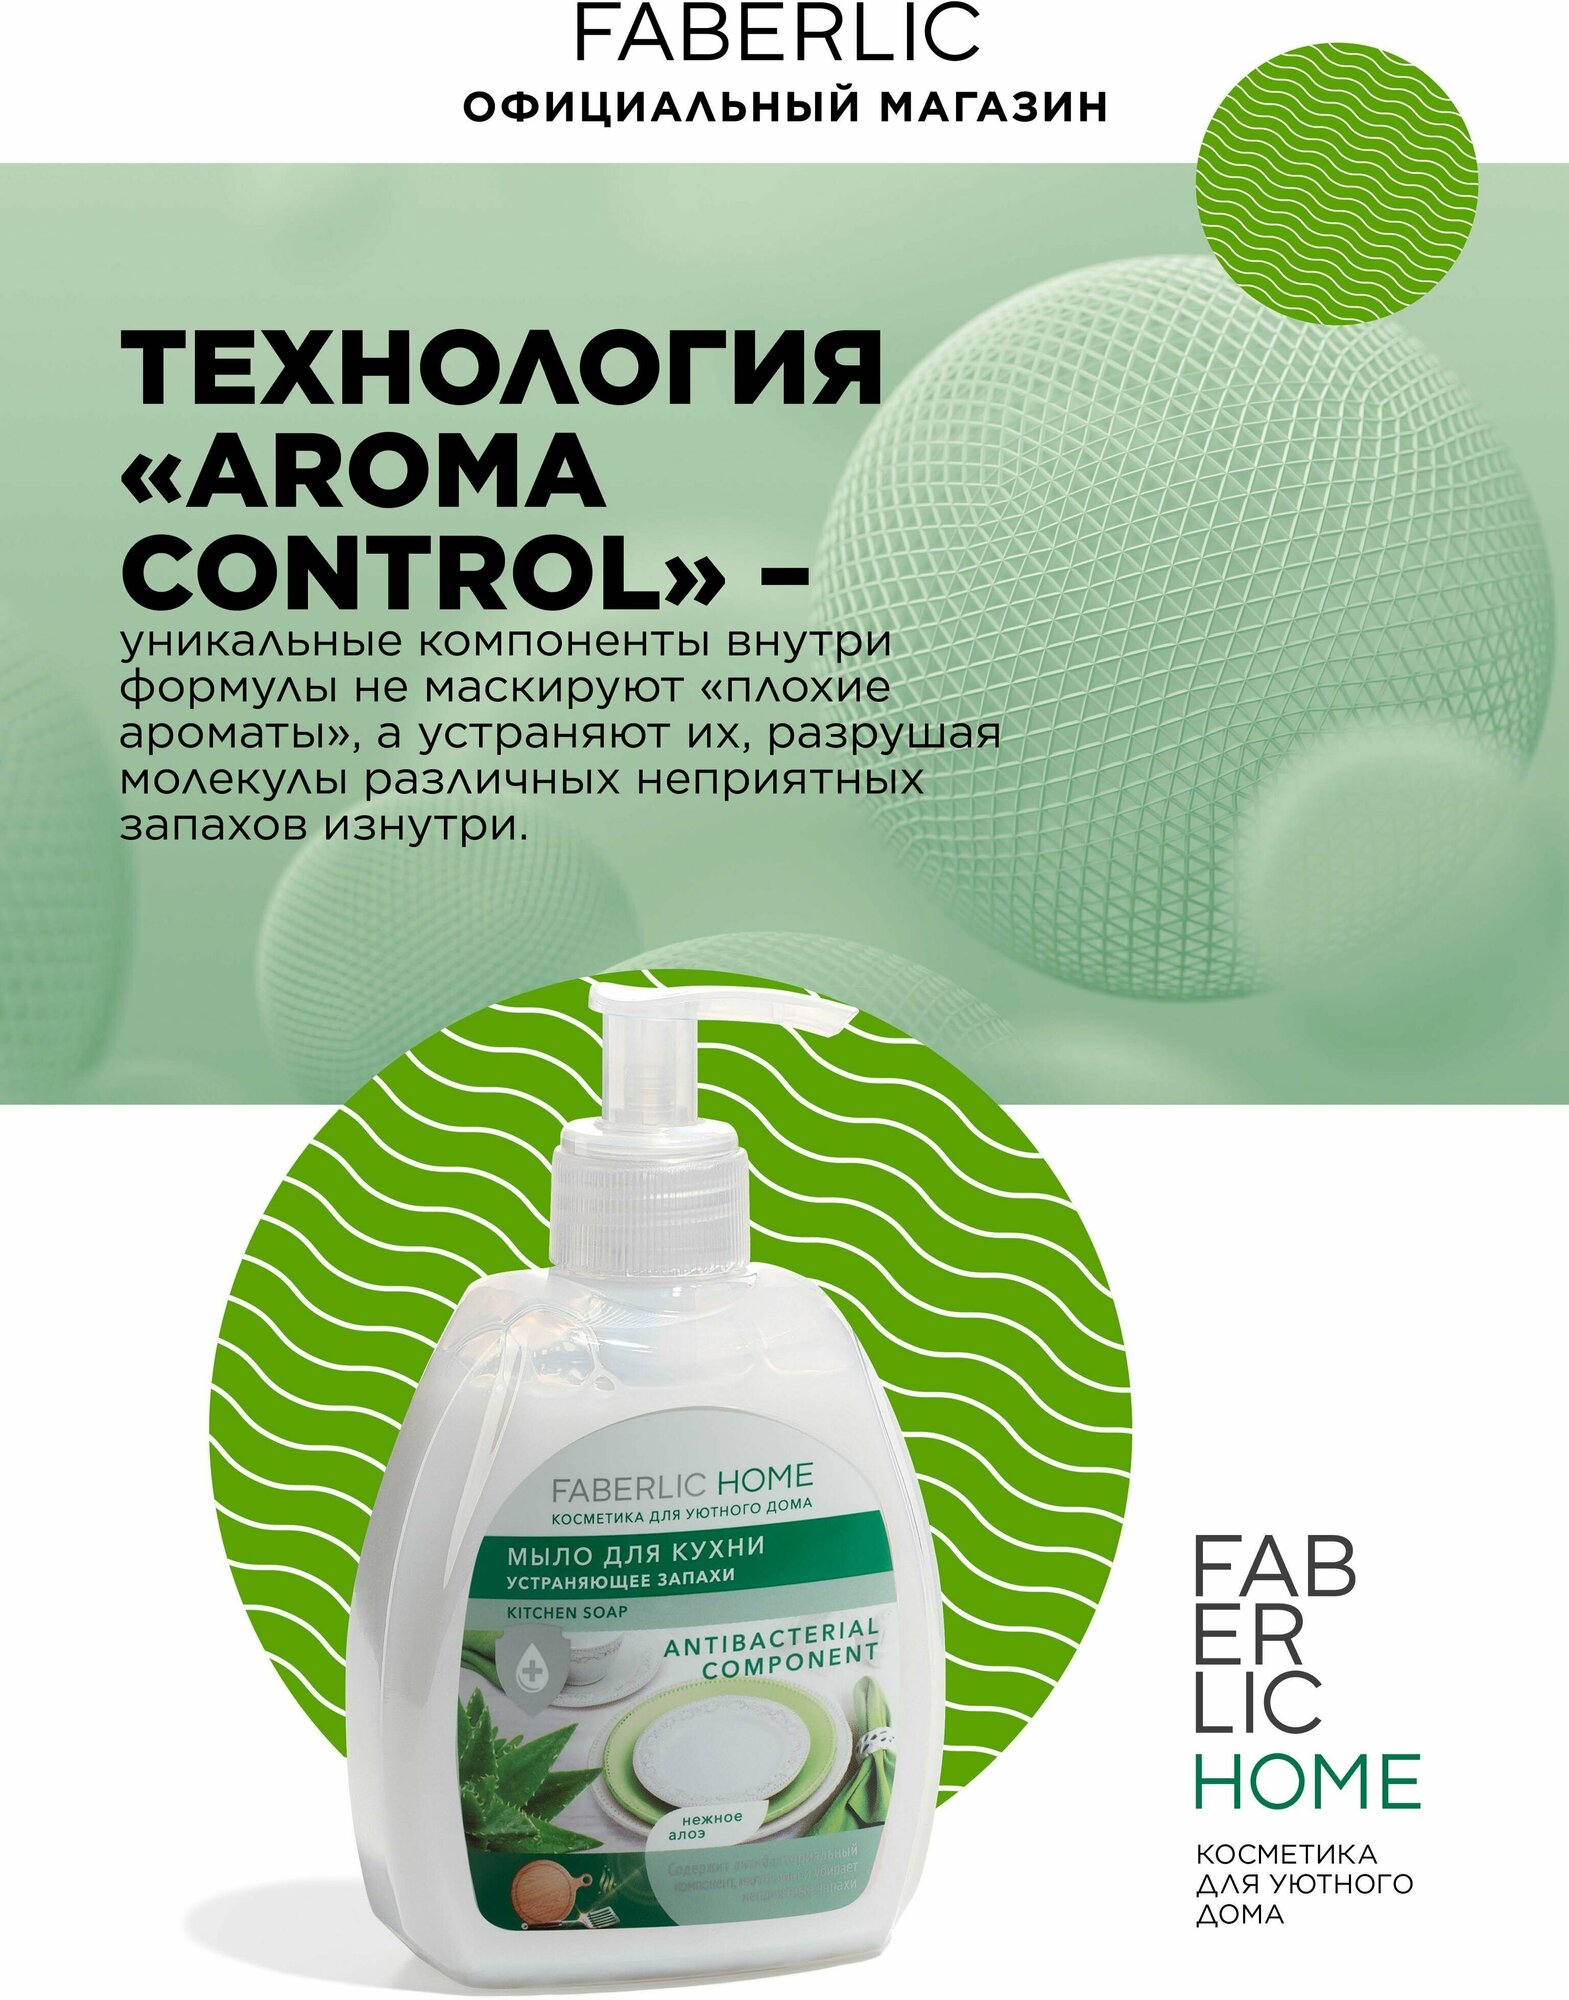 Faberlic Мыло для кухни, устраняющее запахи "Чистота и защита" FABERLIC HOME